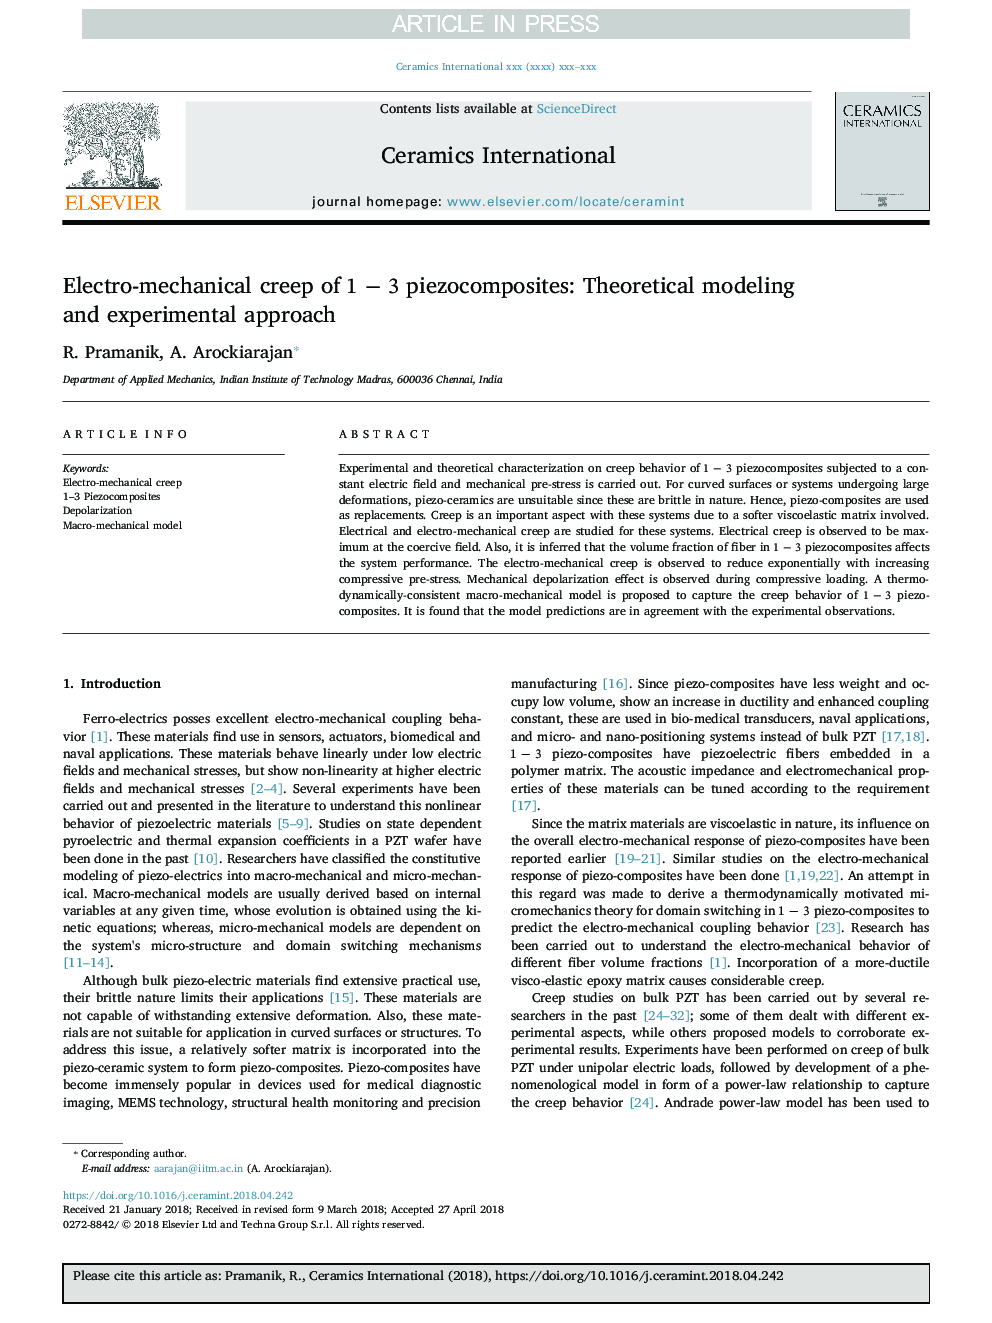 Electro-mechanical creep of 1â3 piezocomposites: Theoretical modeling and experimental approach